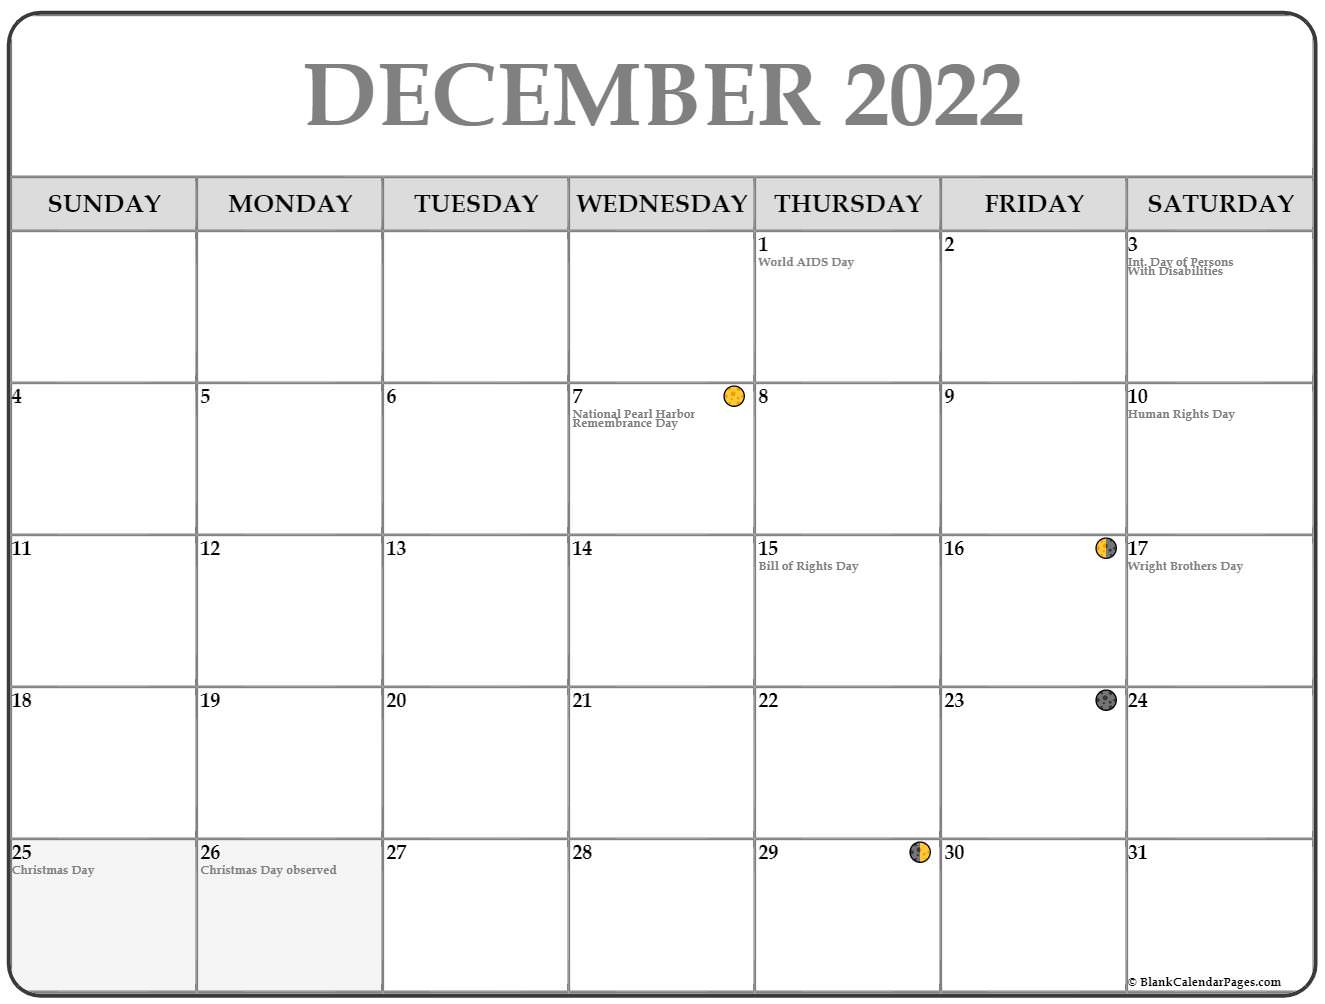 December 2022 Lunar Calendar | Moon Phase Calendar  December 2022 Calendar Images